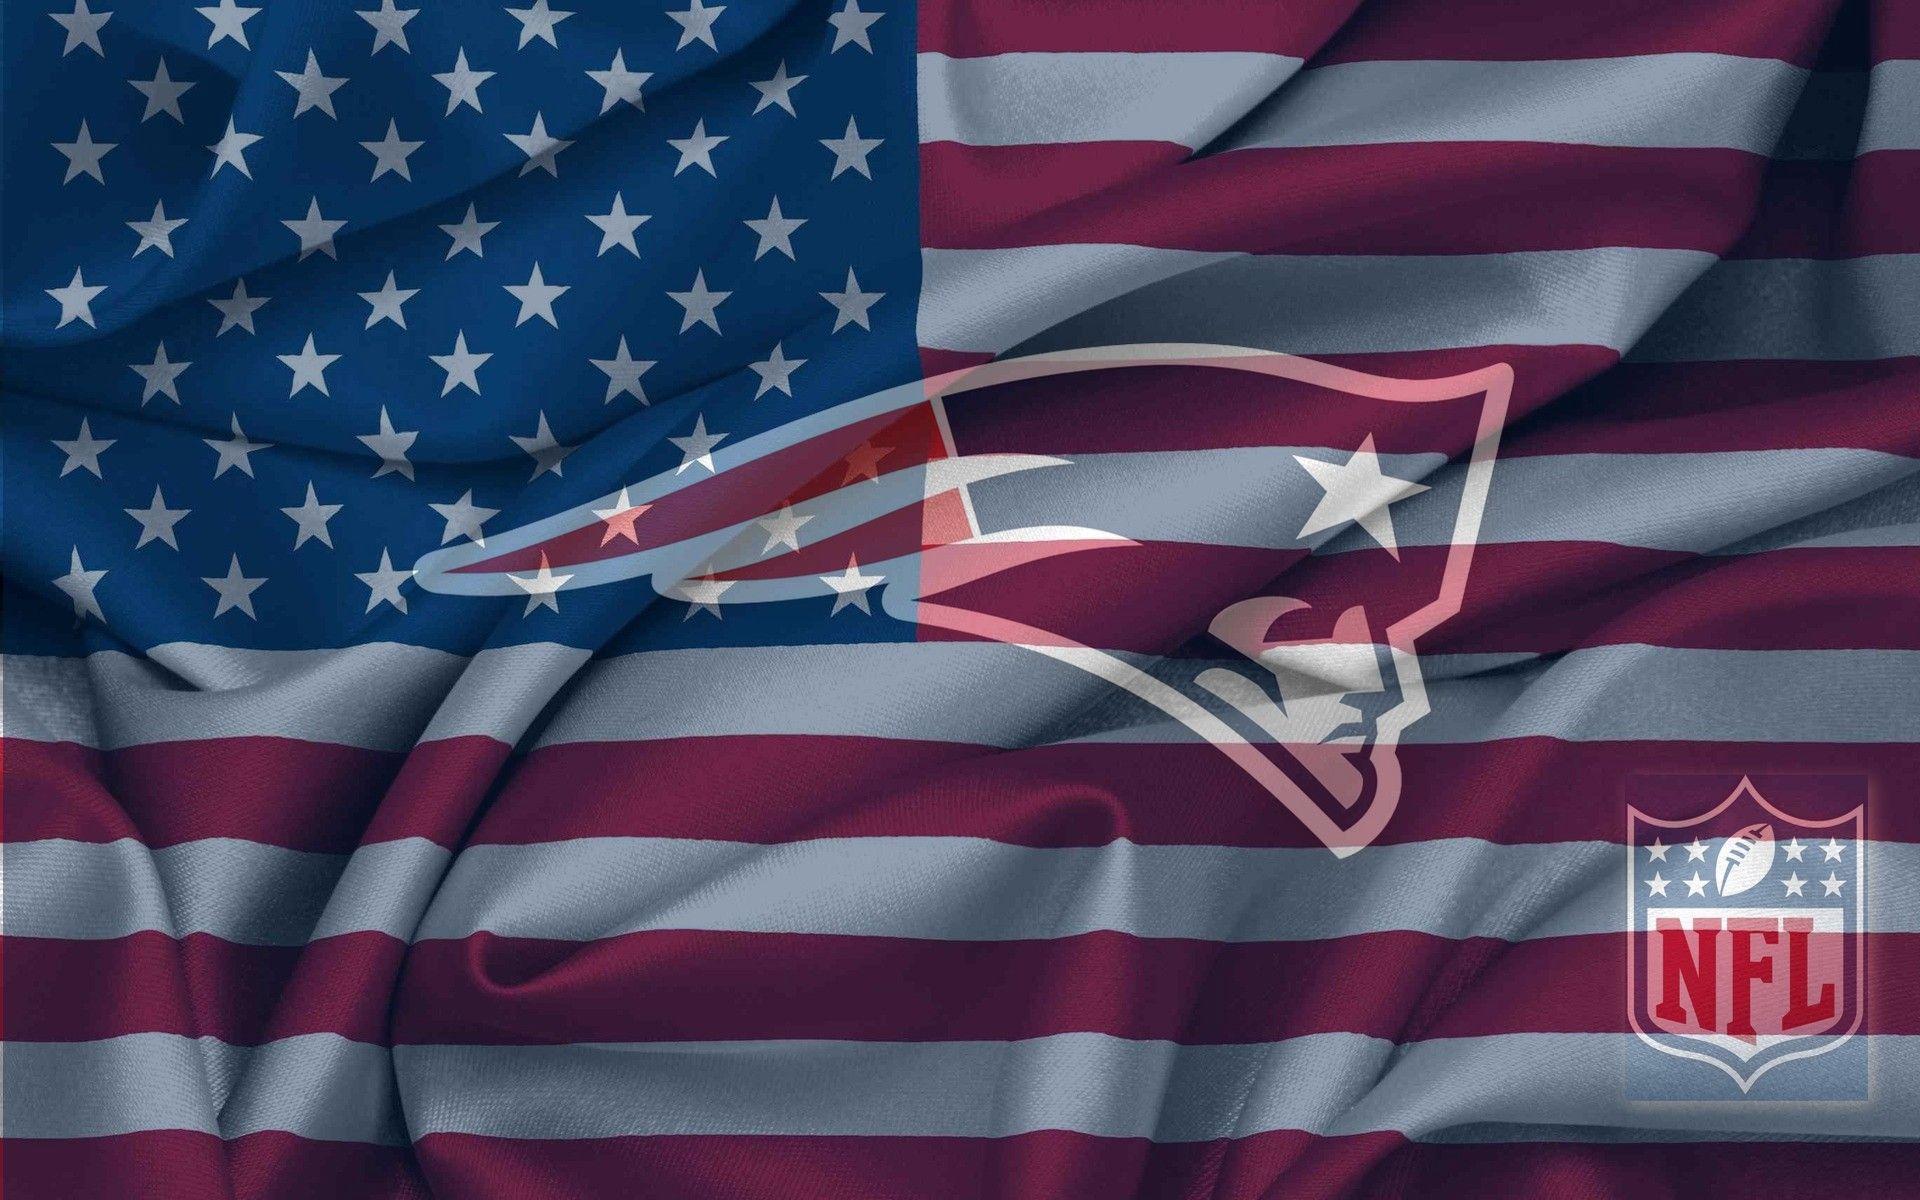 new england patriots image. New England Patriots Logo With NFL